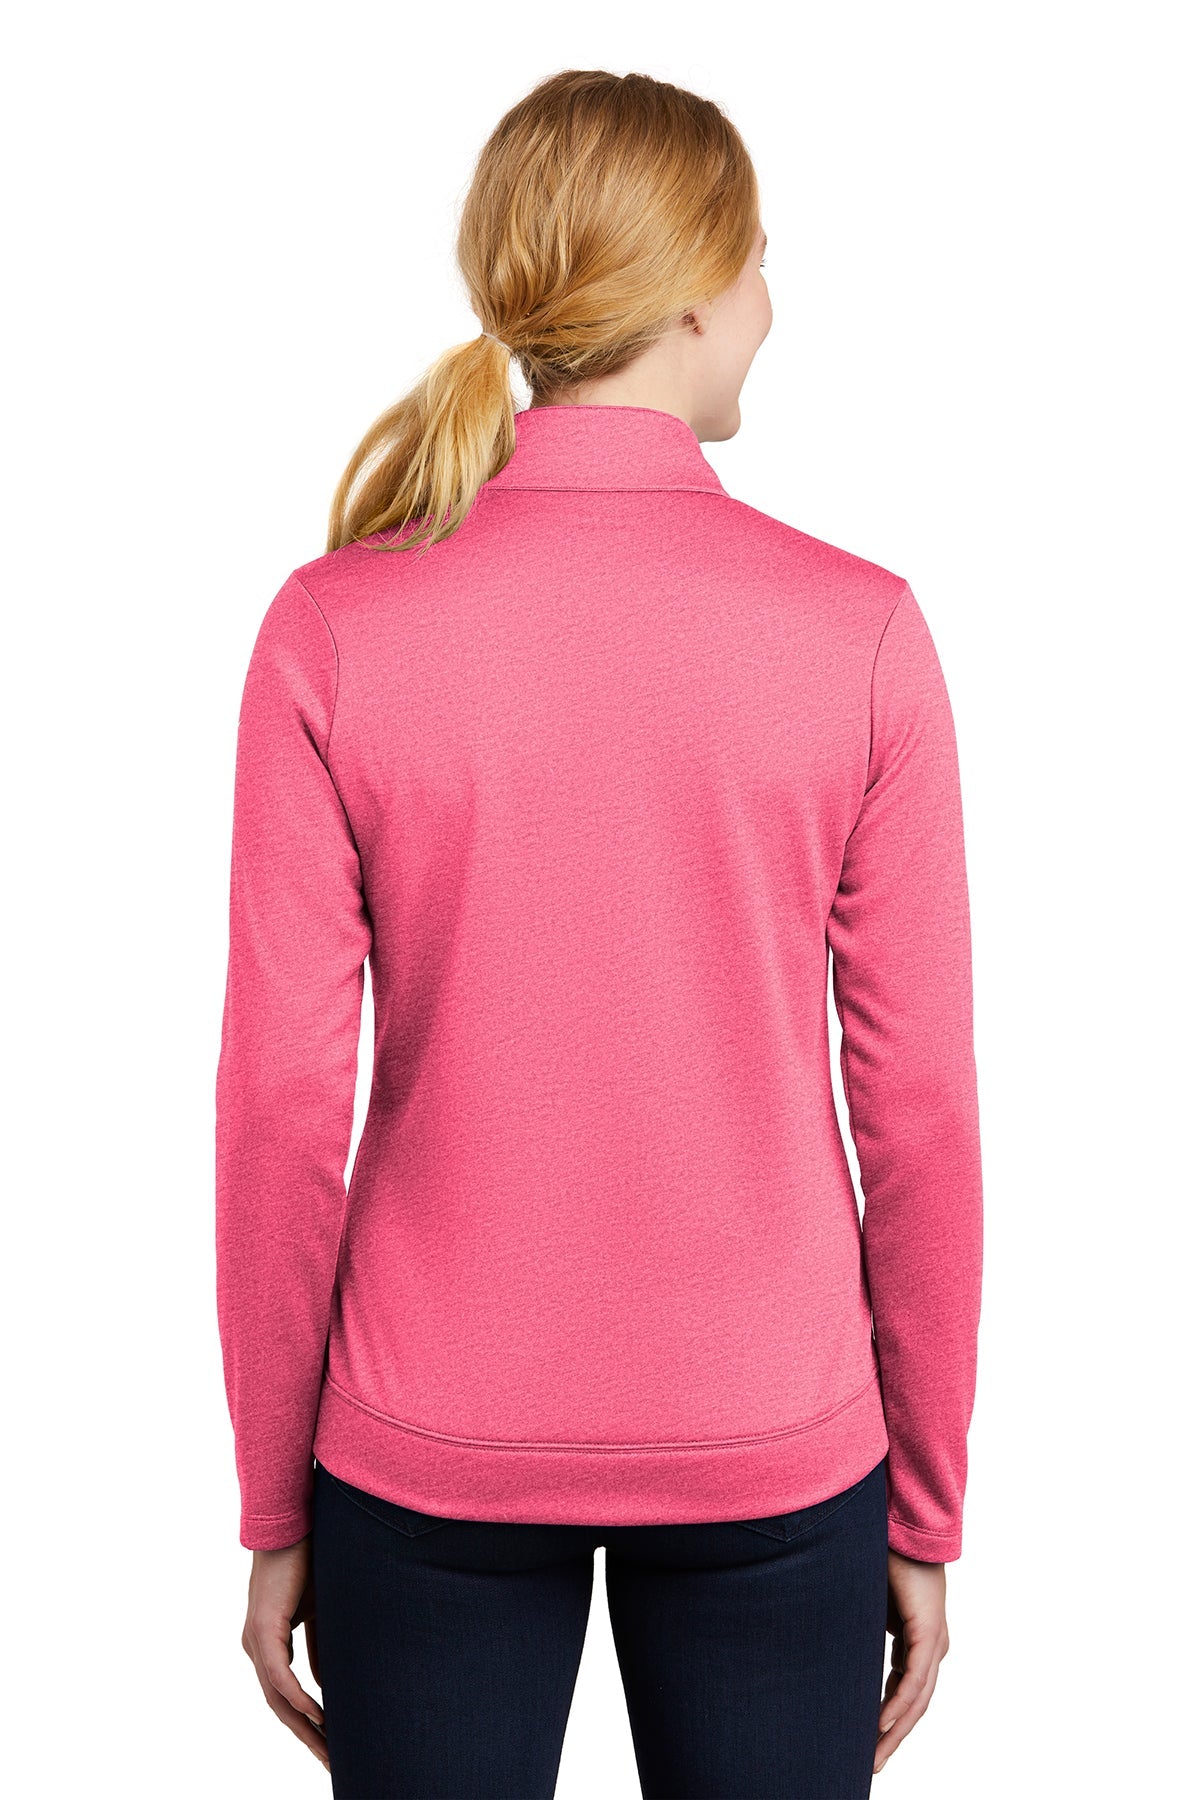 nike_nkah6260 _vivid pink heather_company_logo_jackets